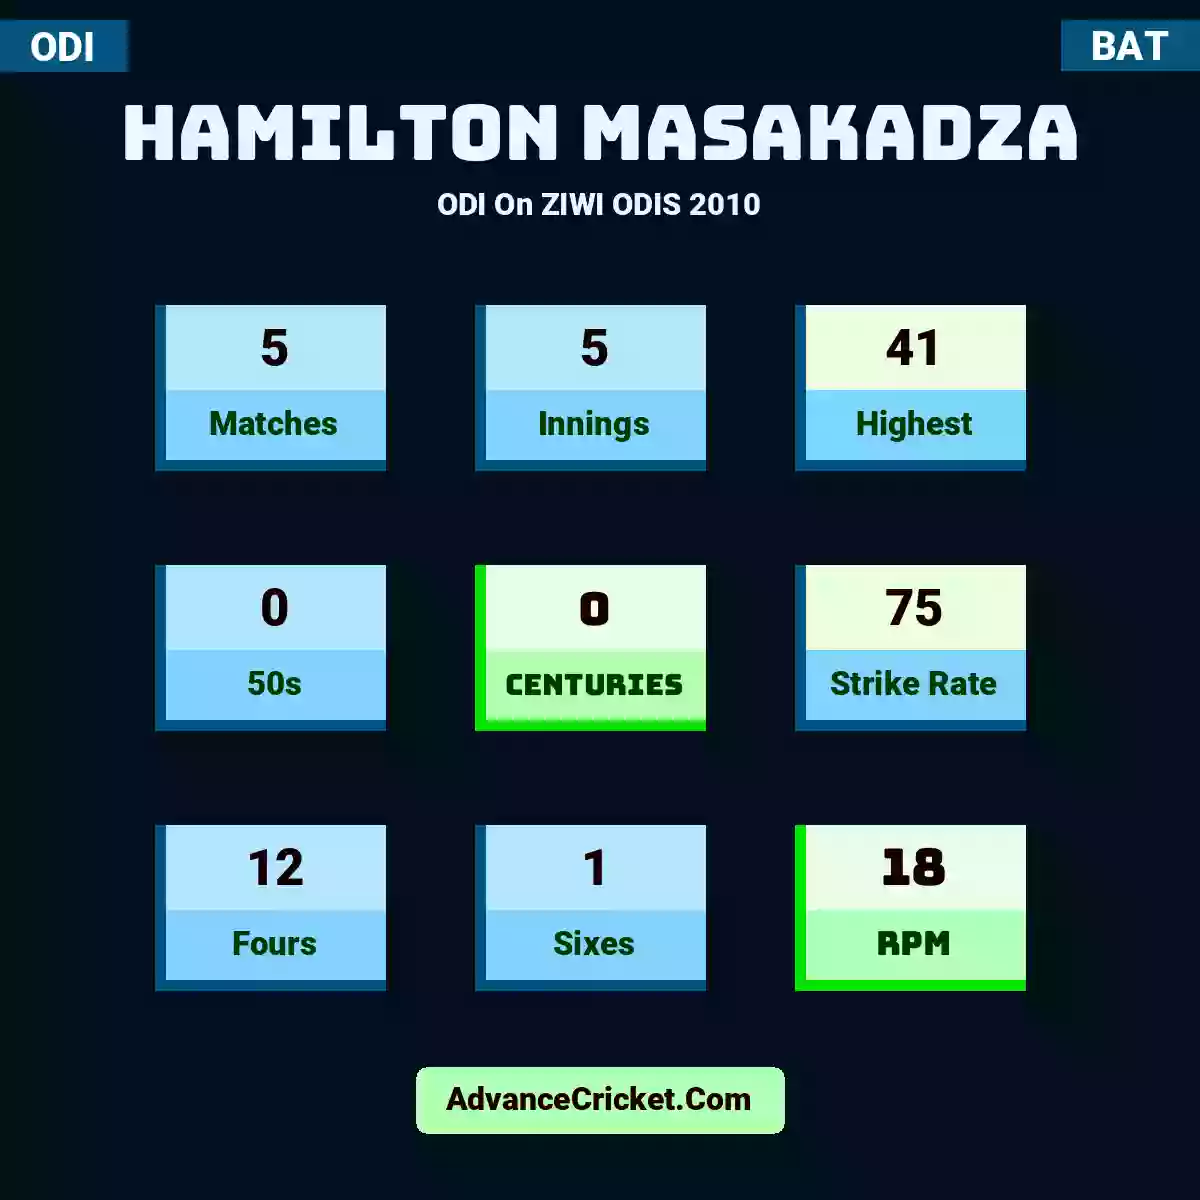 Hamilton Masakadza ODI  On ZIWI ODIS 2010, Hamilton Masakadza played 5 matches, scored 41 runs as highest, 0 half-centuries, and 0 centuries, with a strike rate of 75. H.Masakadza hit 12 fours and 1 sixes, with an RPM of 18.